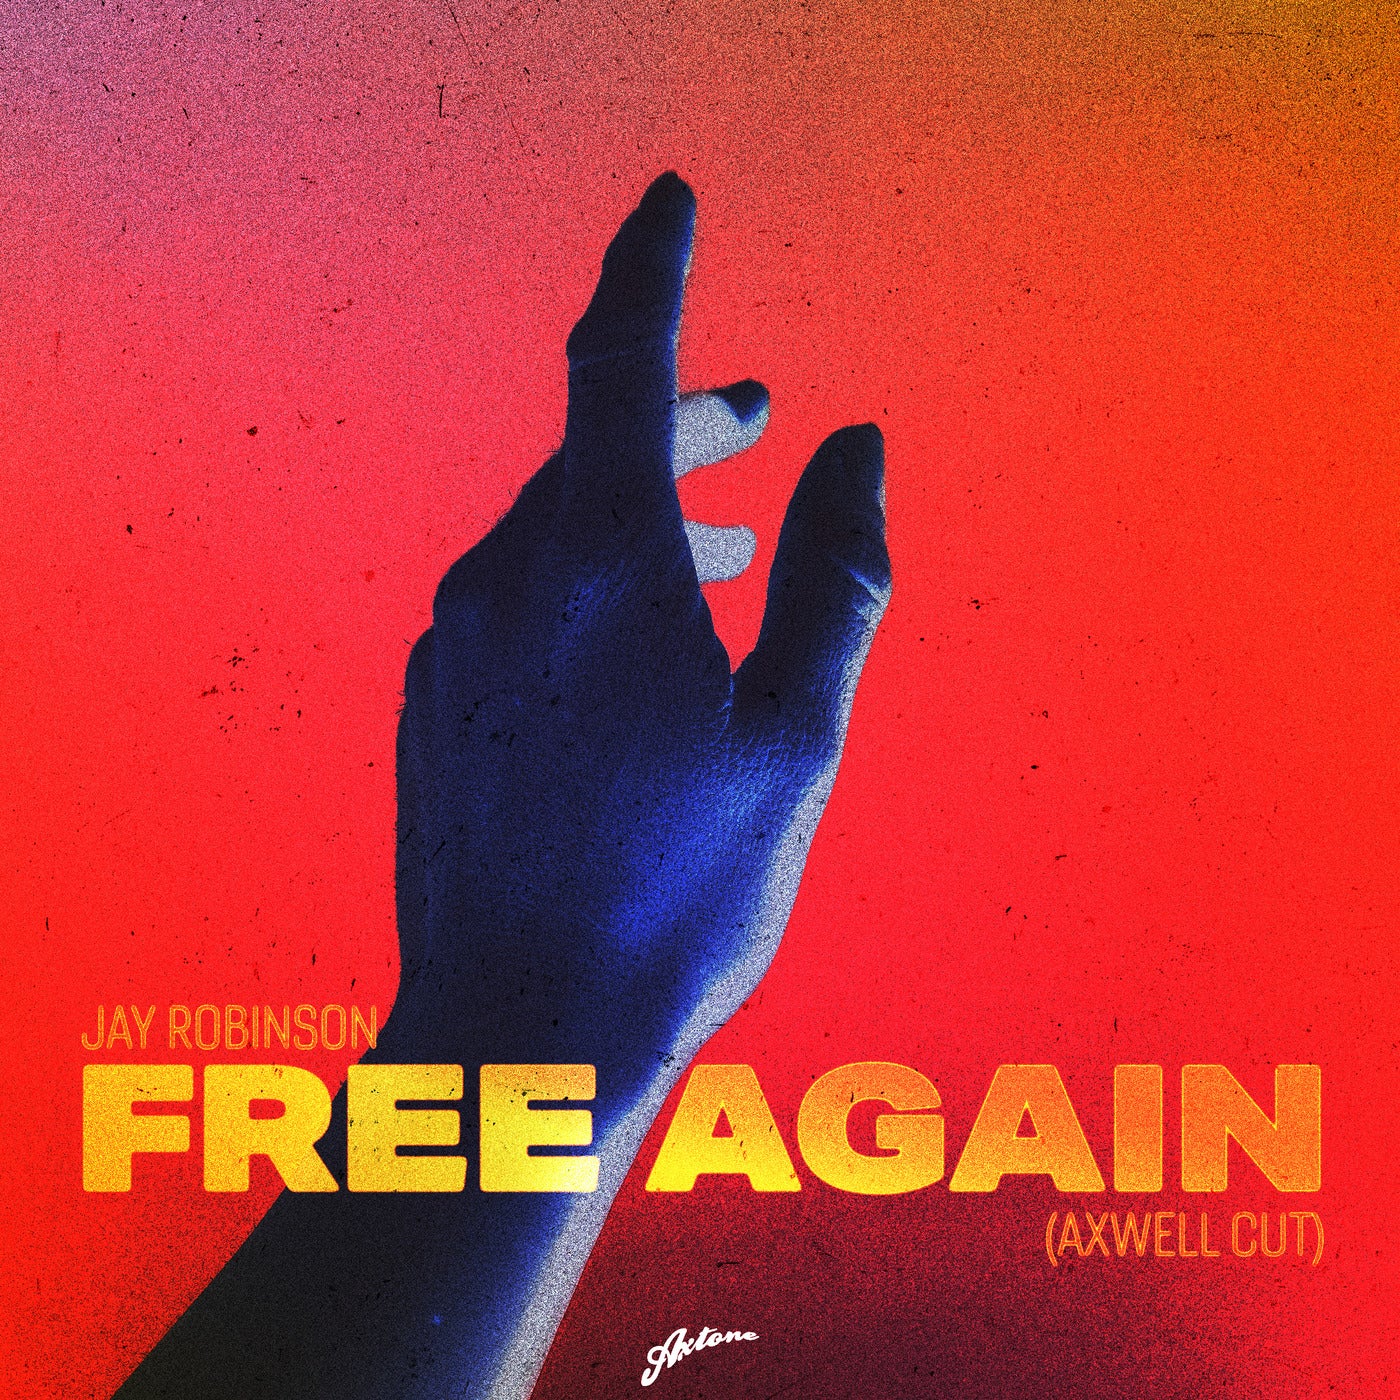 image cover: Axwell, Jay Robinson - Free Again - Axwell Cut / AXT162